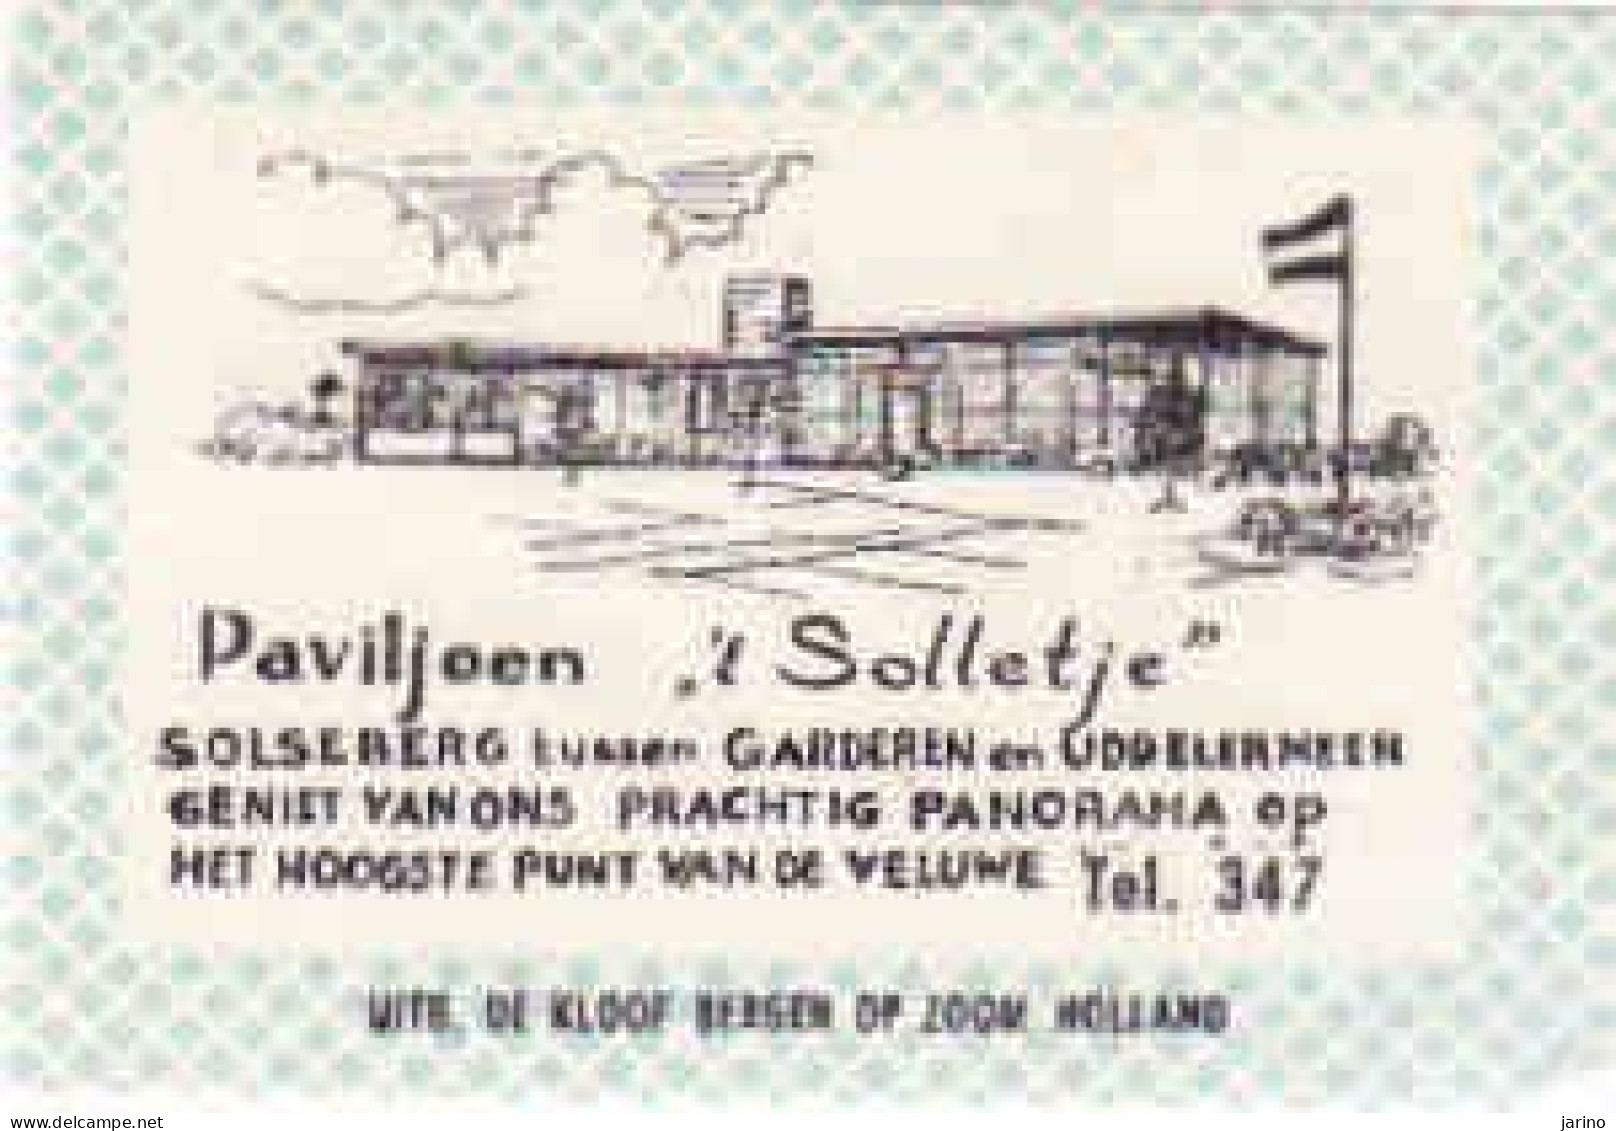 Dutch Matchbox Label, Solseberg Tussen Garderen - Gelderland, Paviljeen 't Solletje, Holland, Netherlands - Boites D'allumettes - Etiquettes